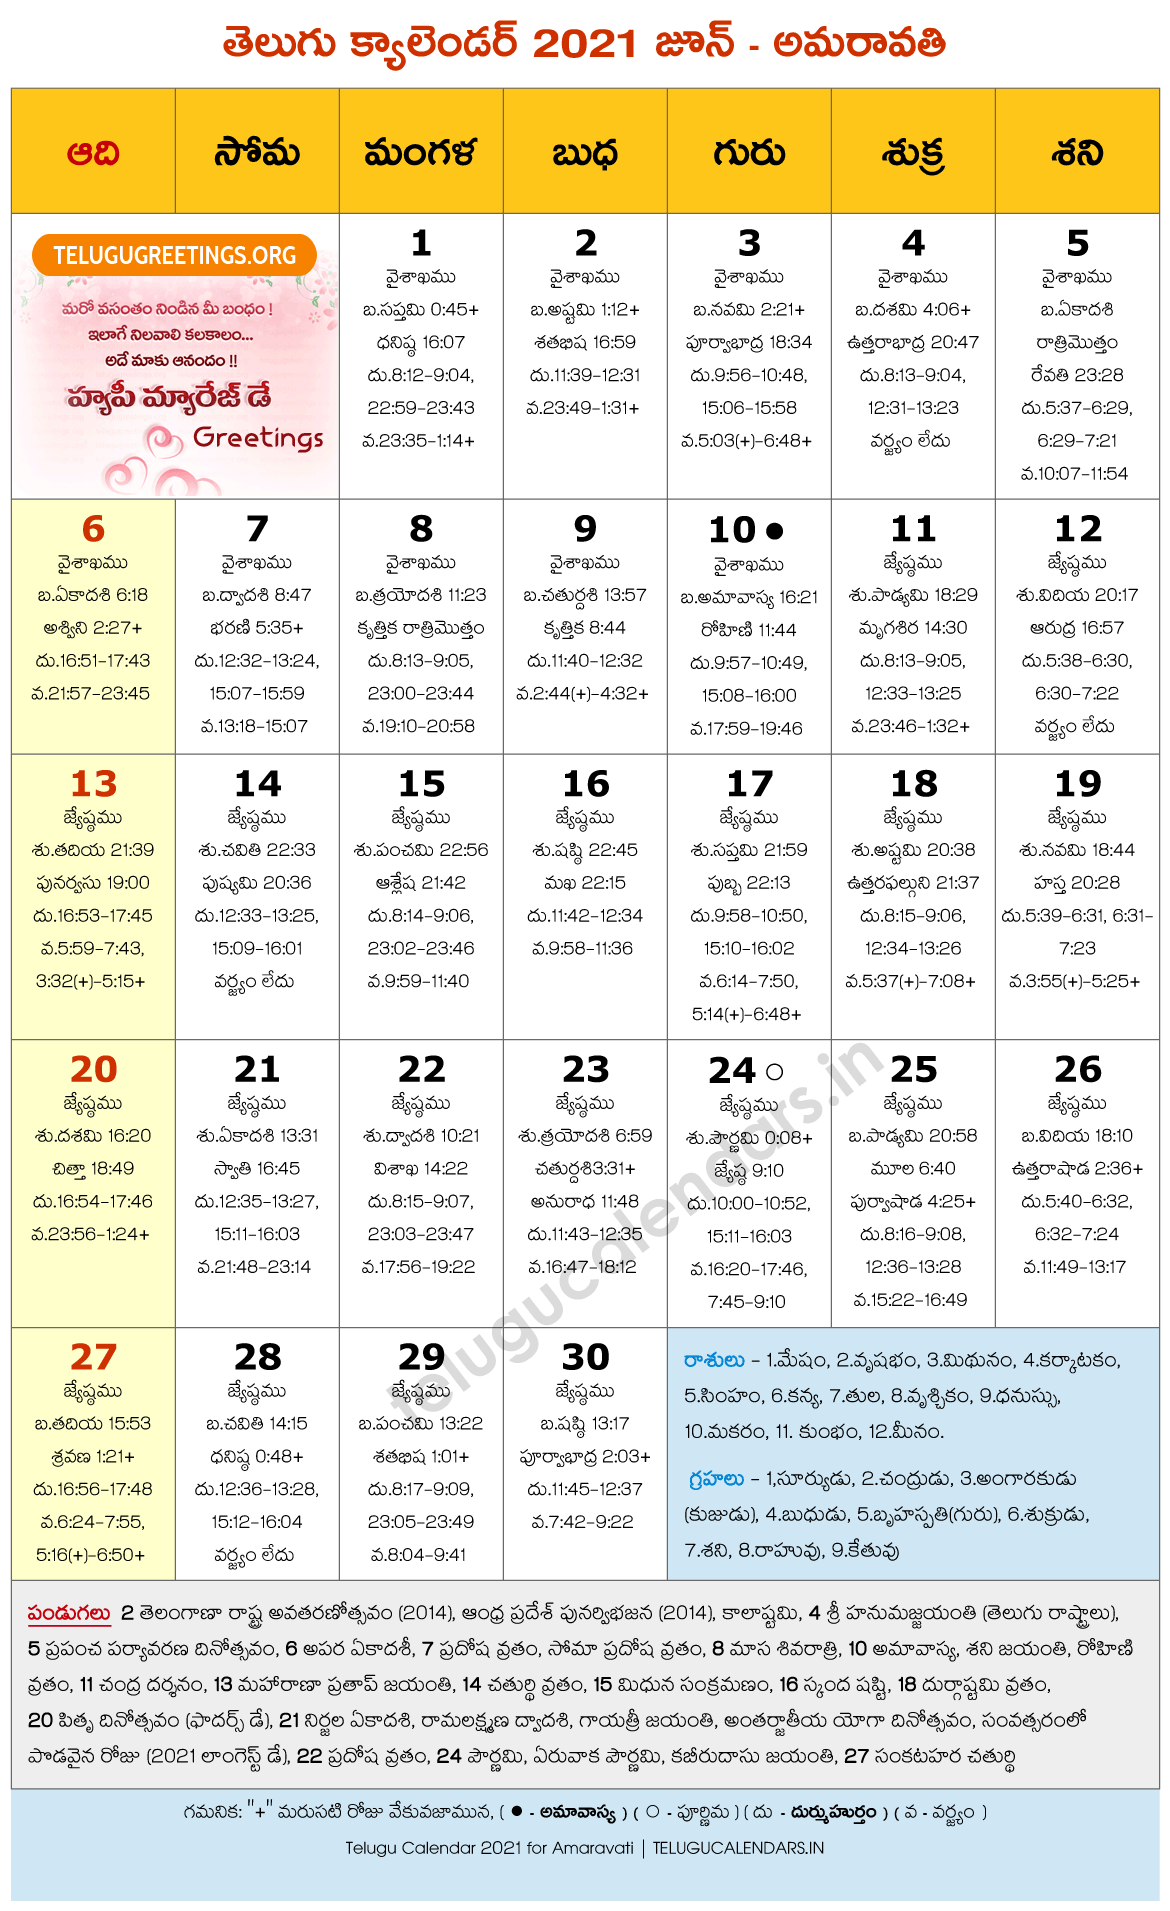 Amaravati 2021 June Telugu Calendar - 2022 Telugu Calendar PDF